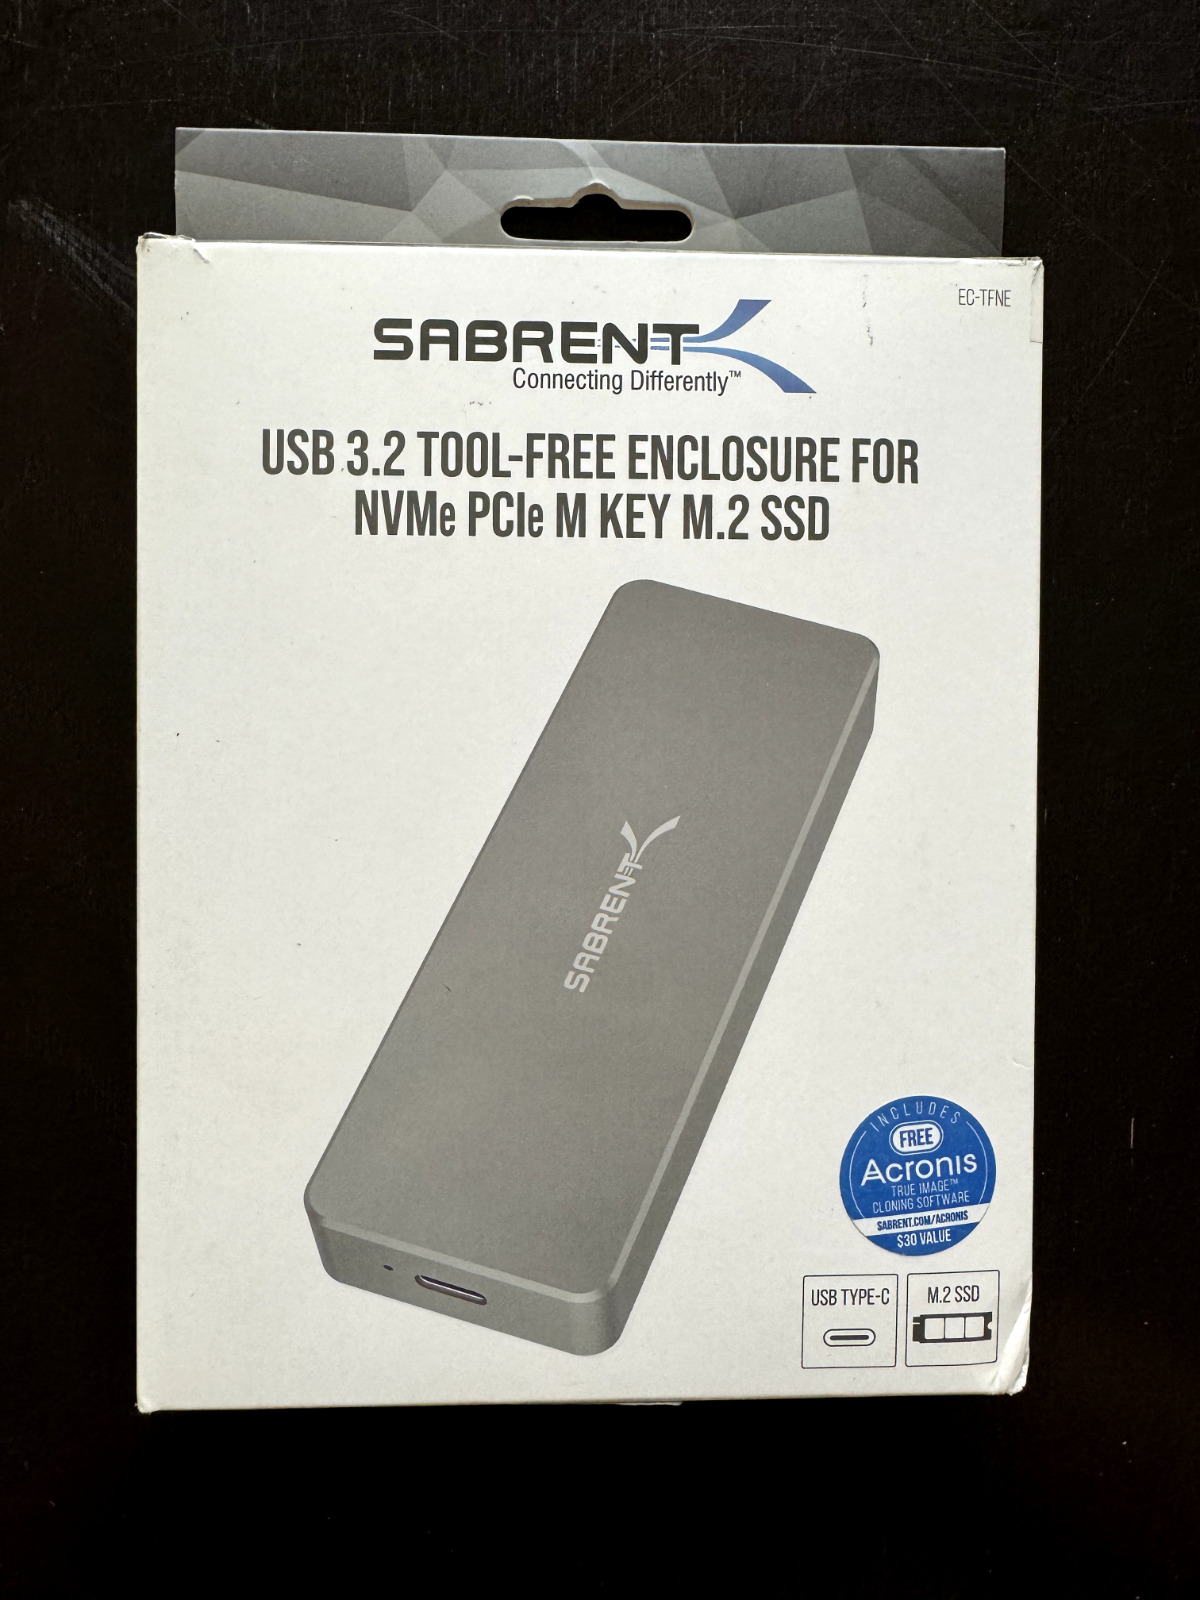 Sabrent USB 3.2 Tool-Free Enclosure for NVMe PCIe M Key M.2 SSD EC-TFNE - Silver